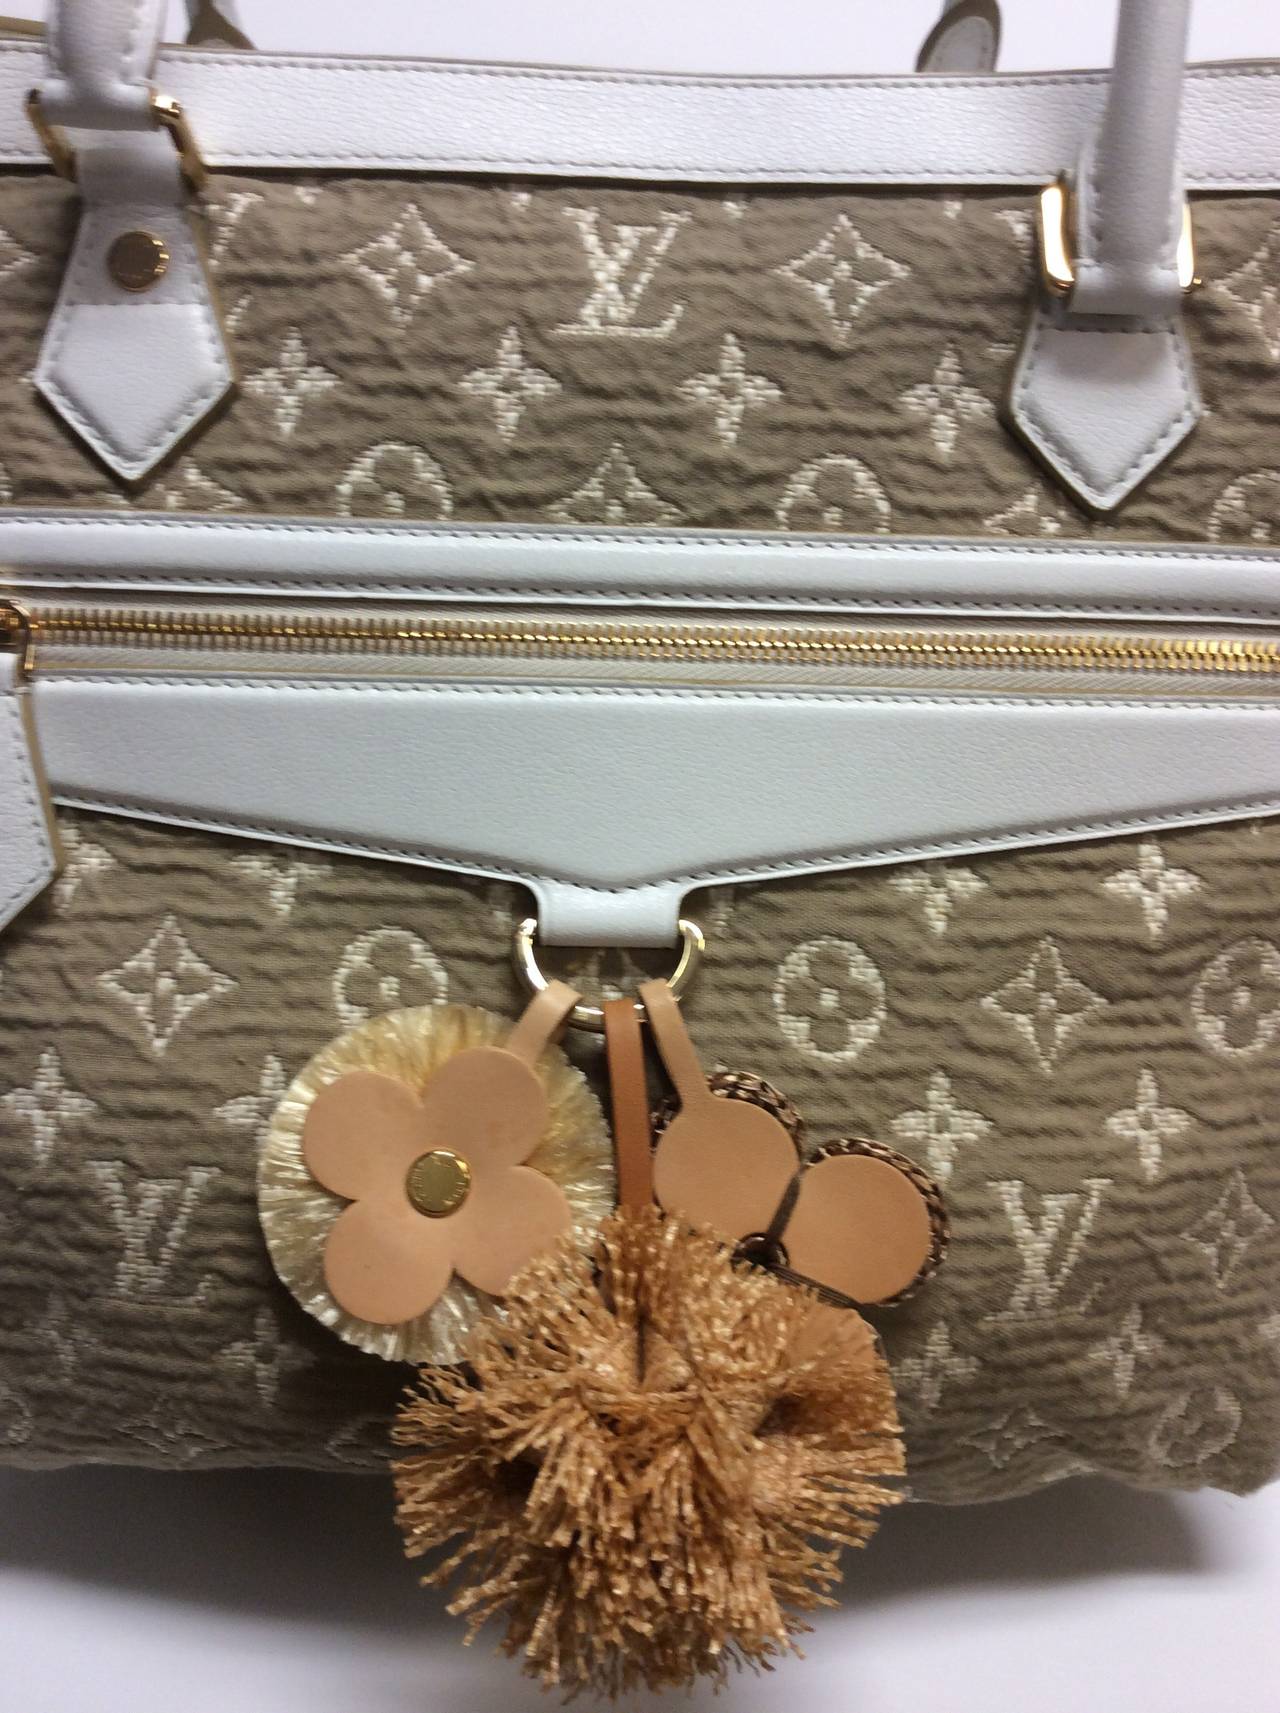 2011 Louis Vuitton Cruise Collection Sabbia large tote handbag